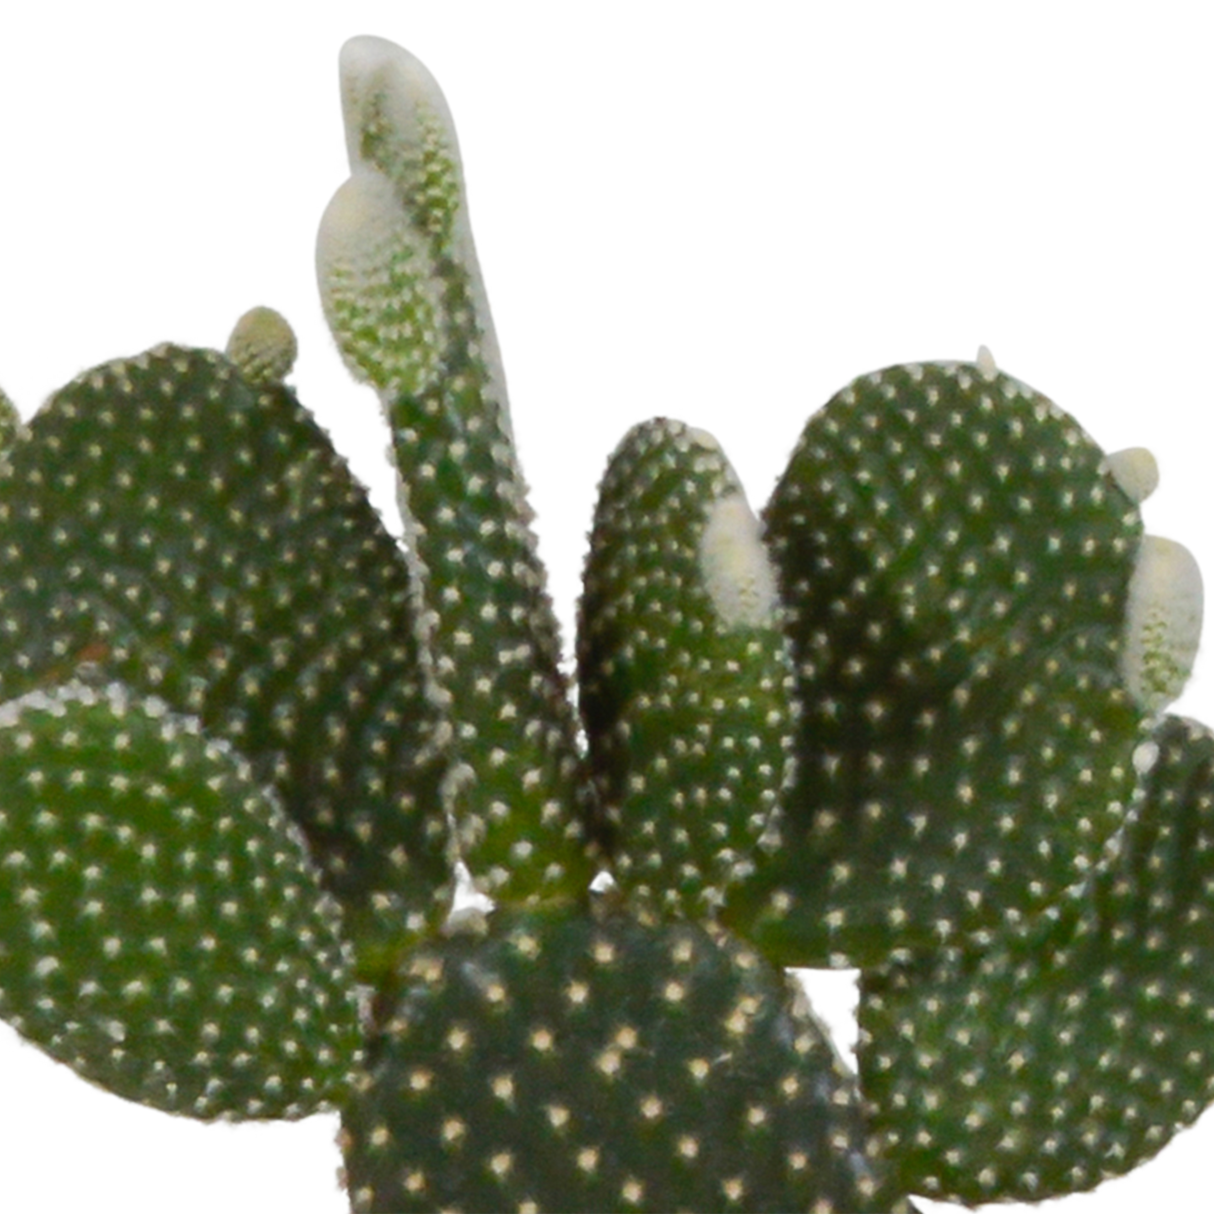 Cactus box and its caches-<tc>POTS</tc> terracotta - Set of 3 plants, h23cm